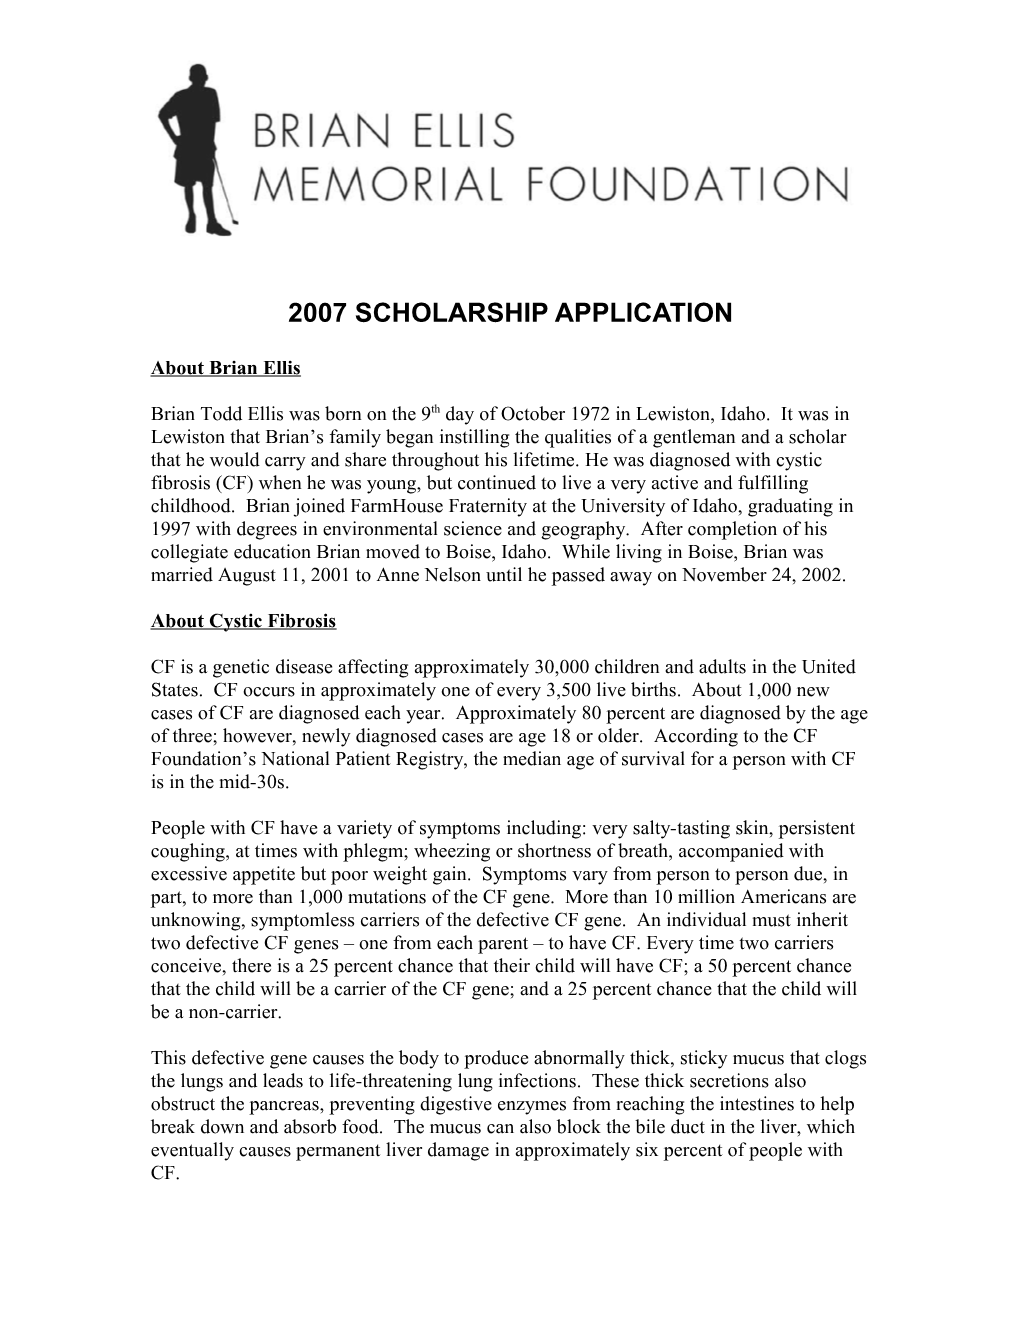 Brian Ellis Memorial Foundation